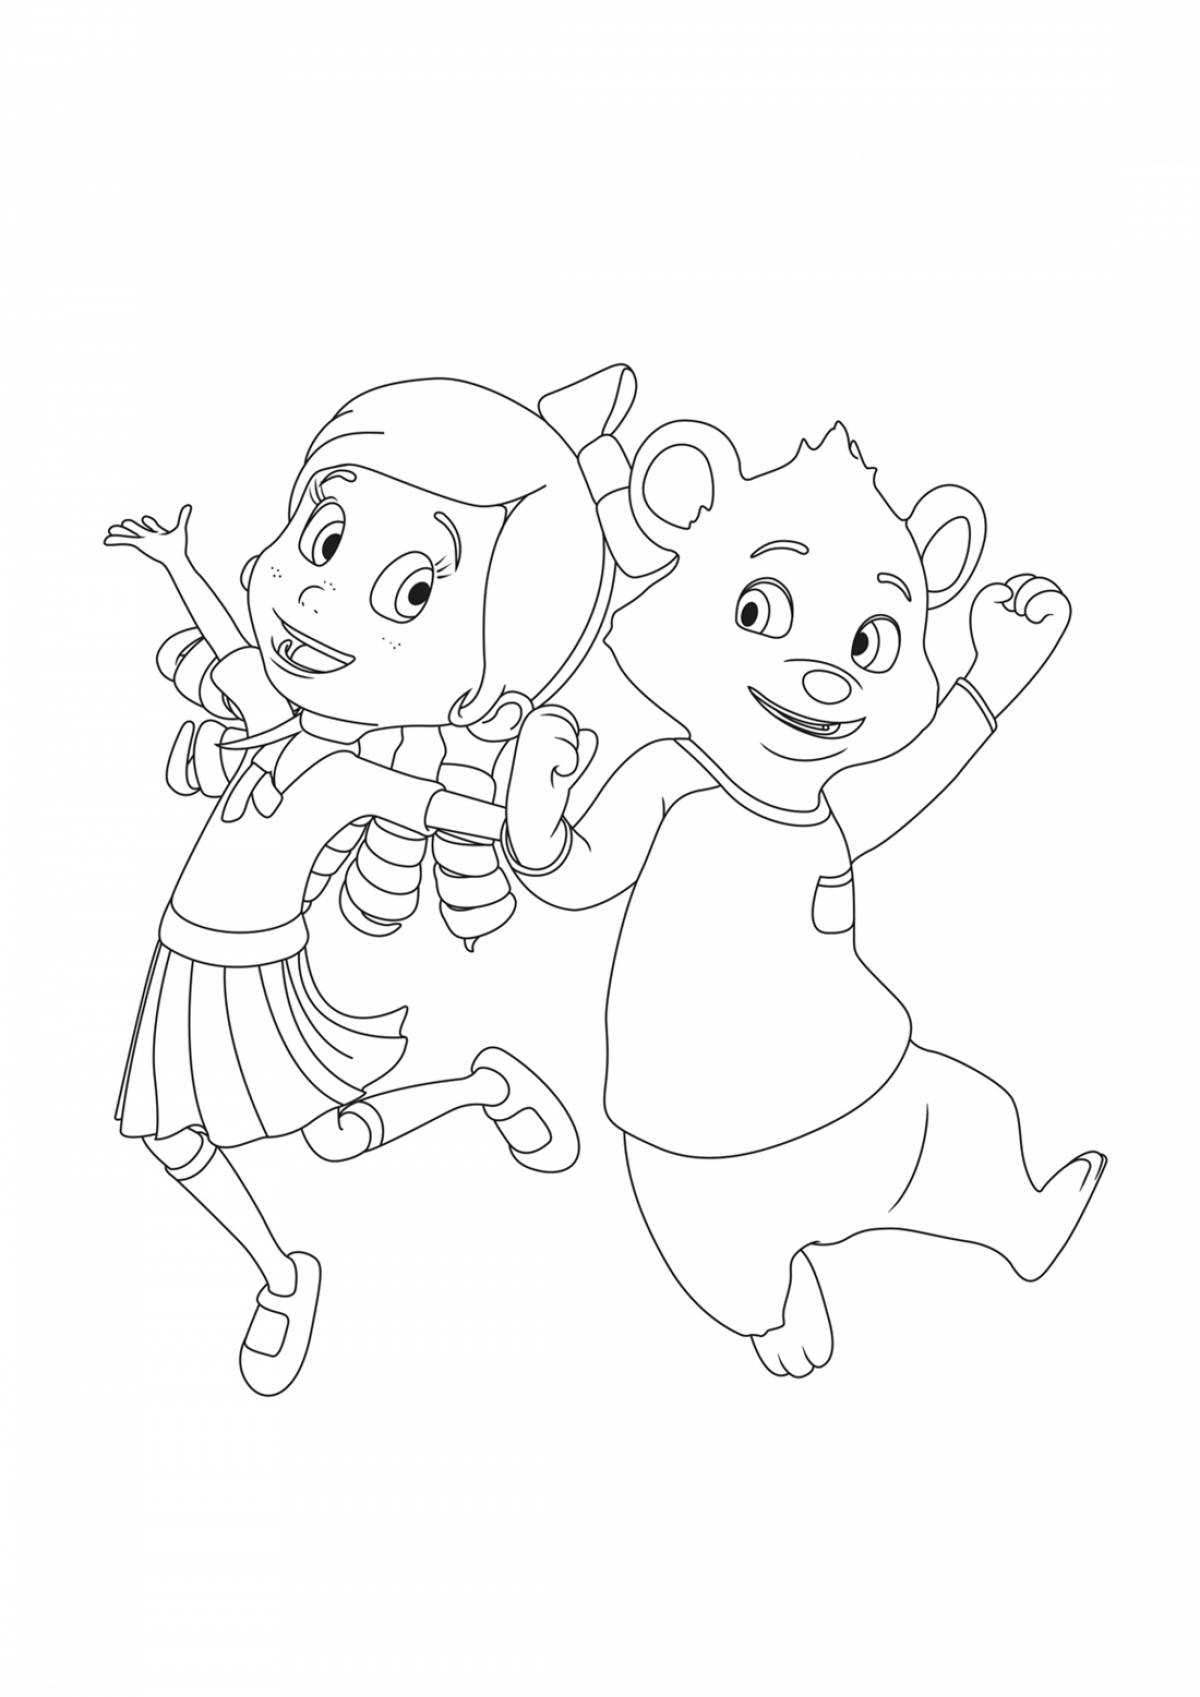 Cartoon goldie and teddy bear